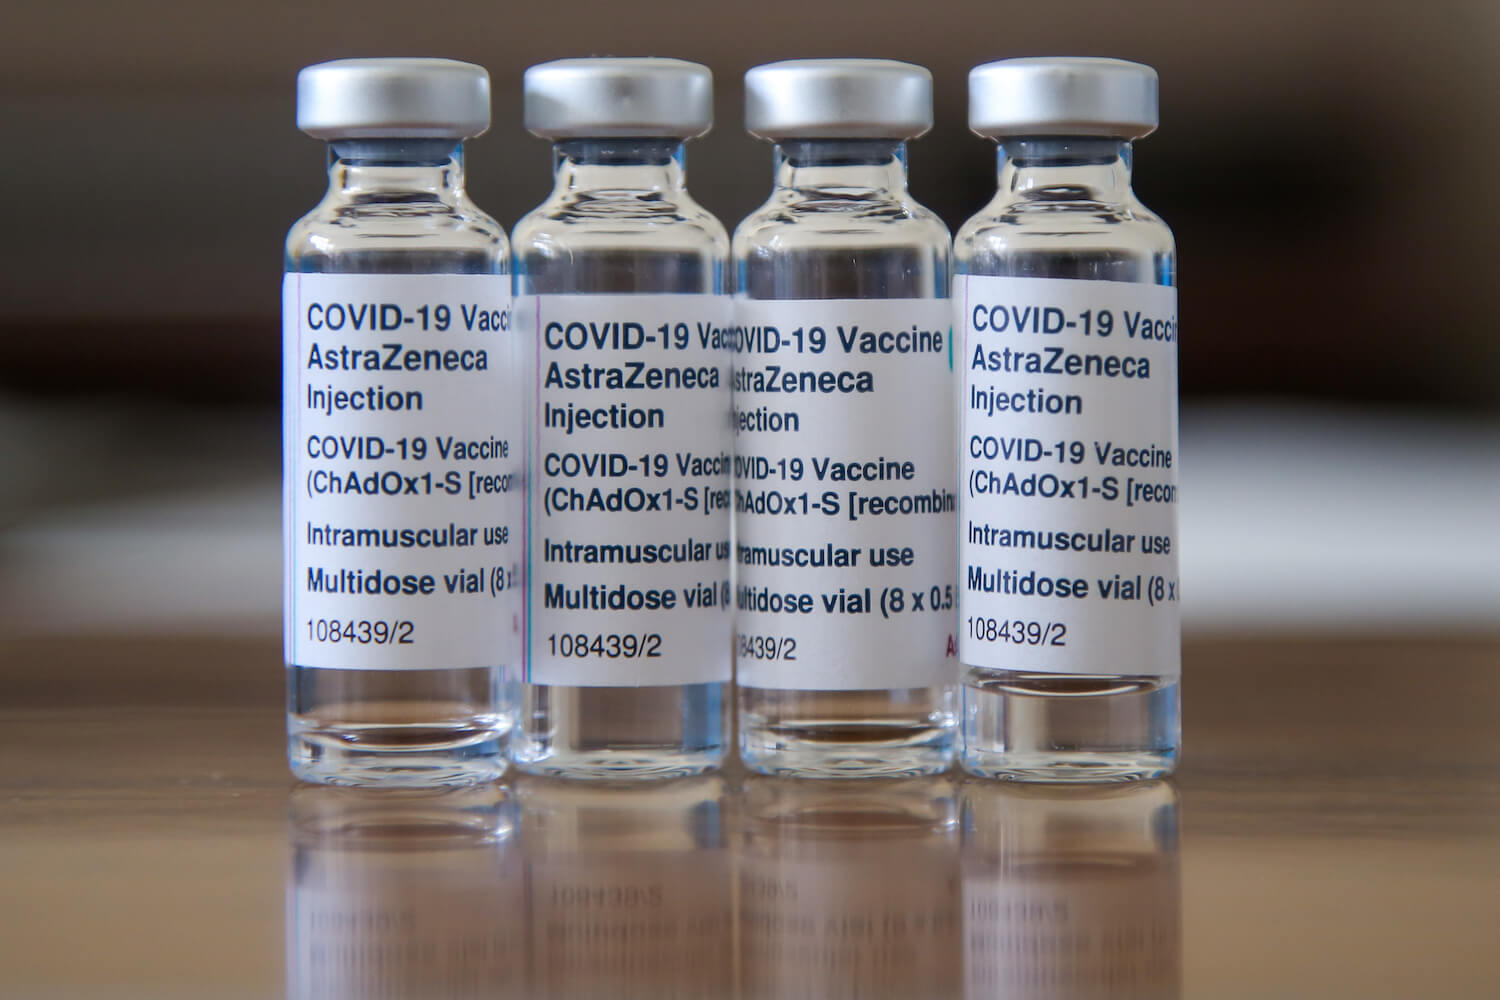 Symbolbild Impfungen Covid-19